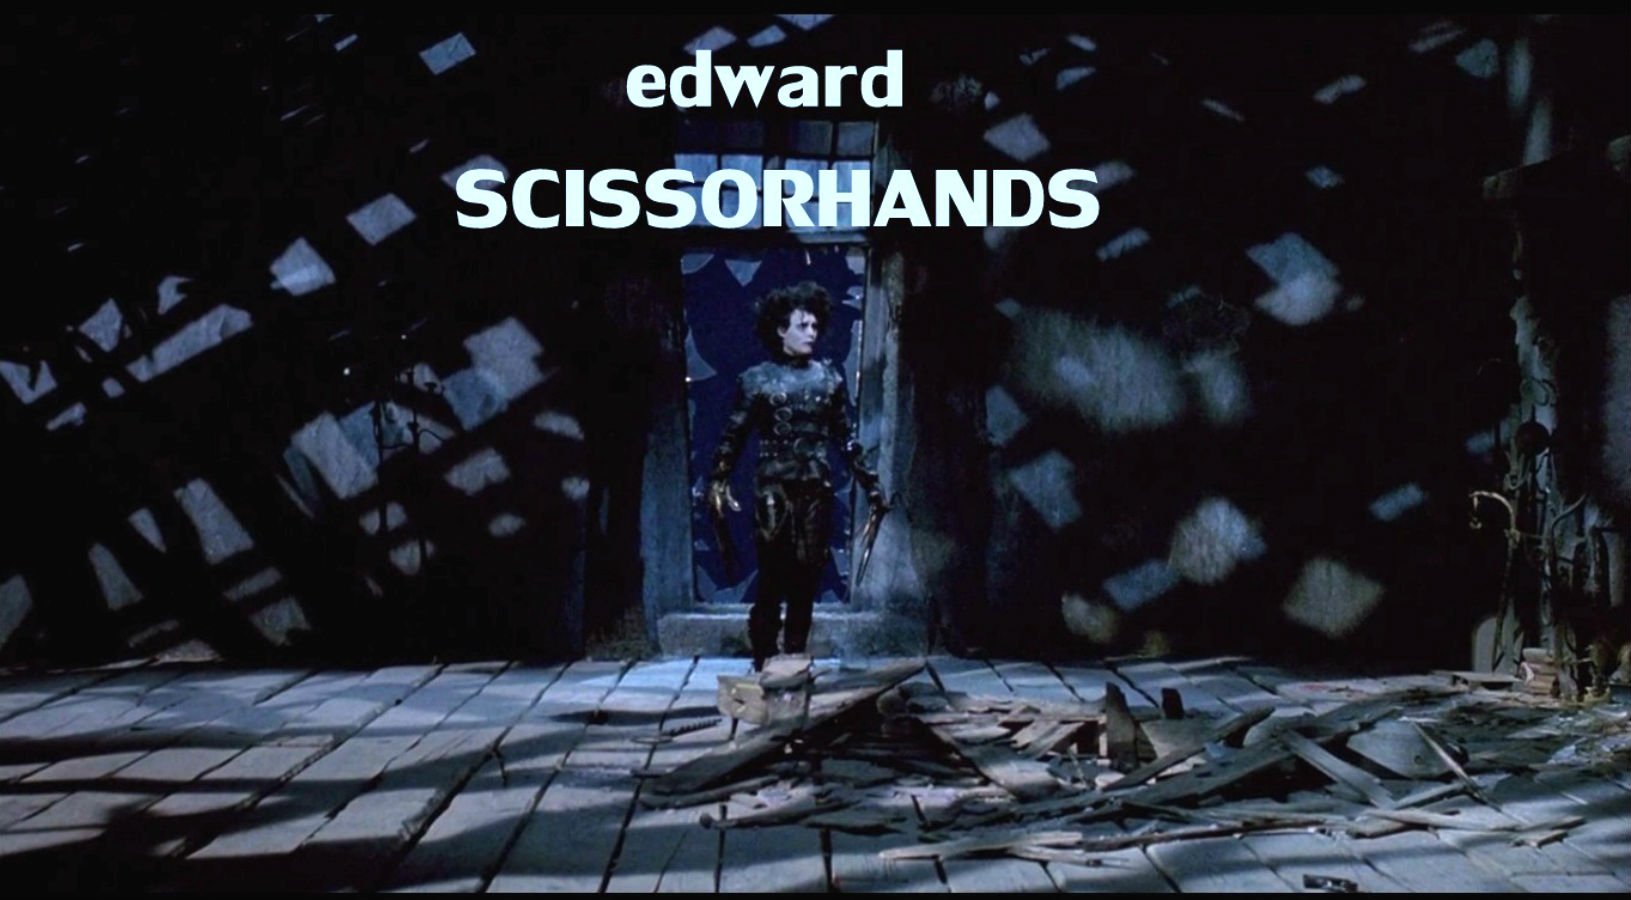 EDWARD SCISSORHANDS drama fantasy romance depp wallpaper 1631x900